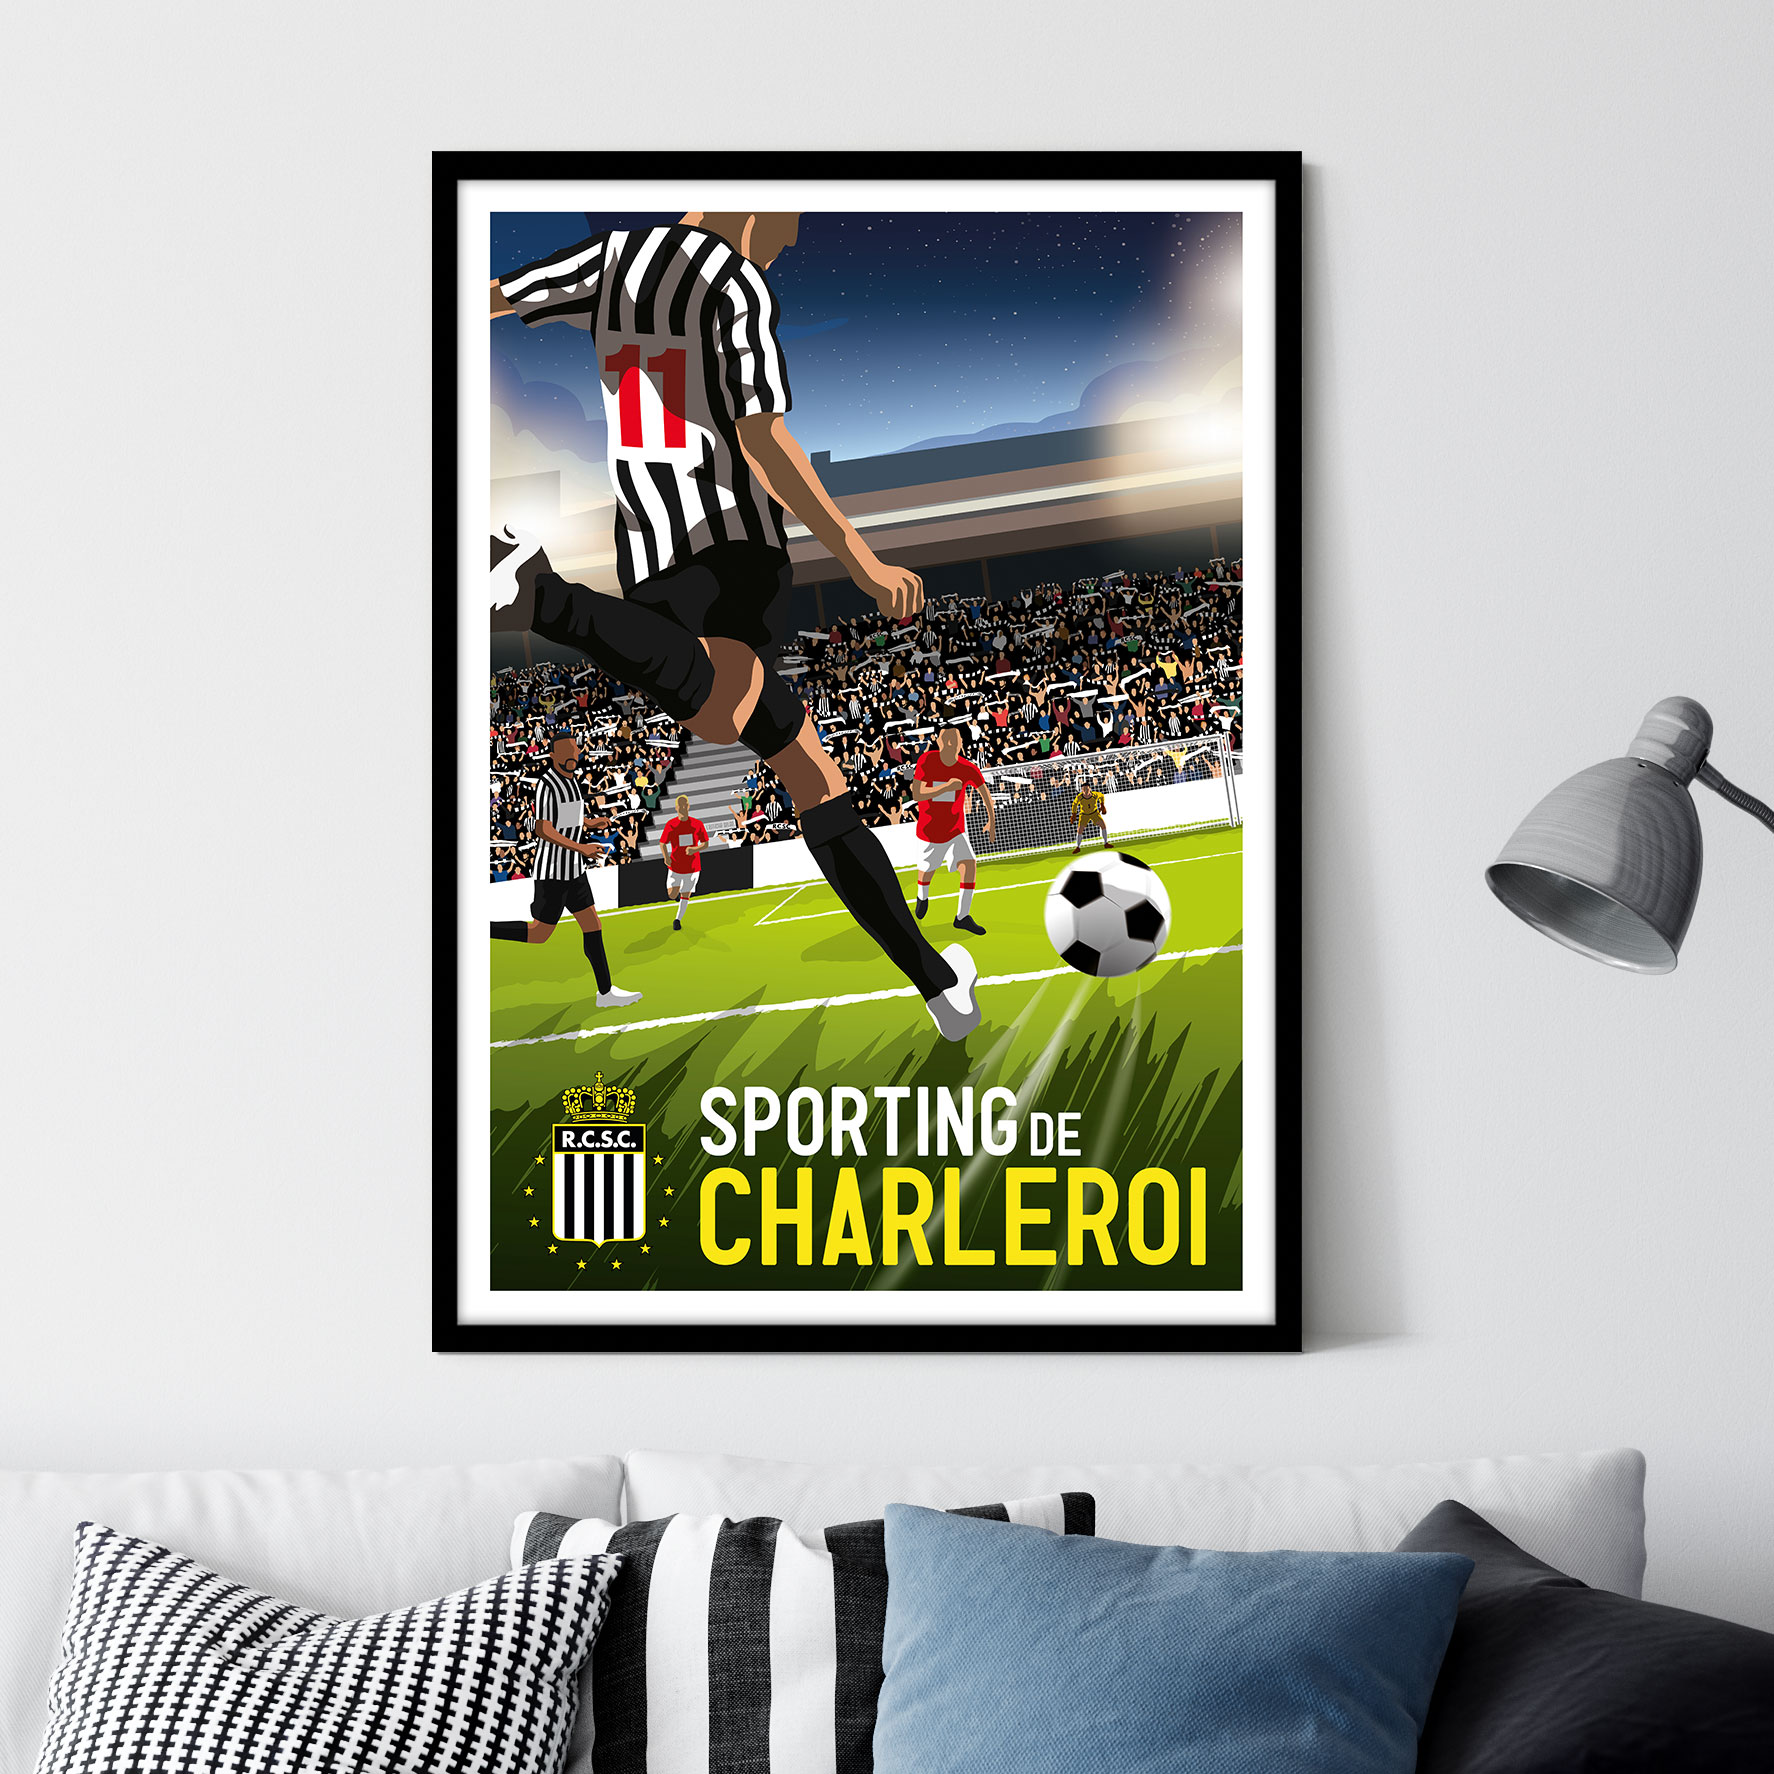 Sporting de Charleroi poster